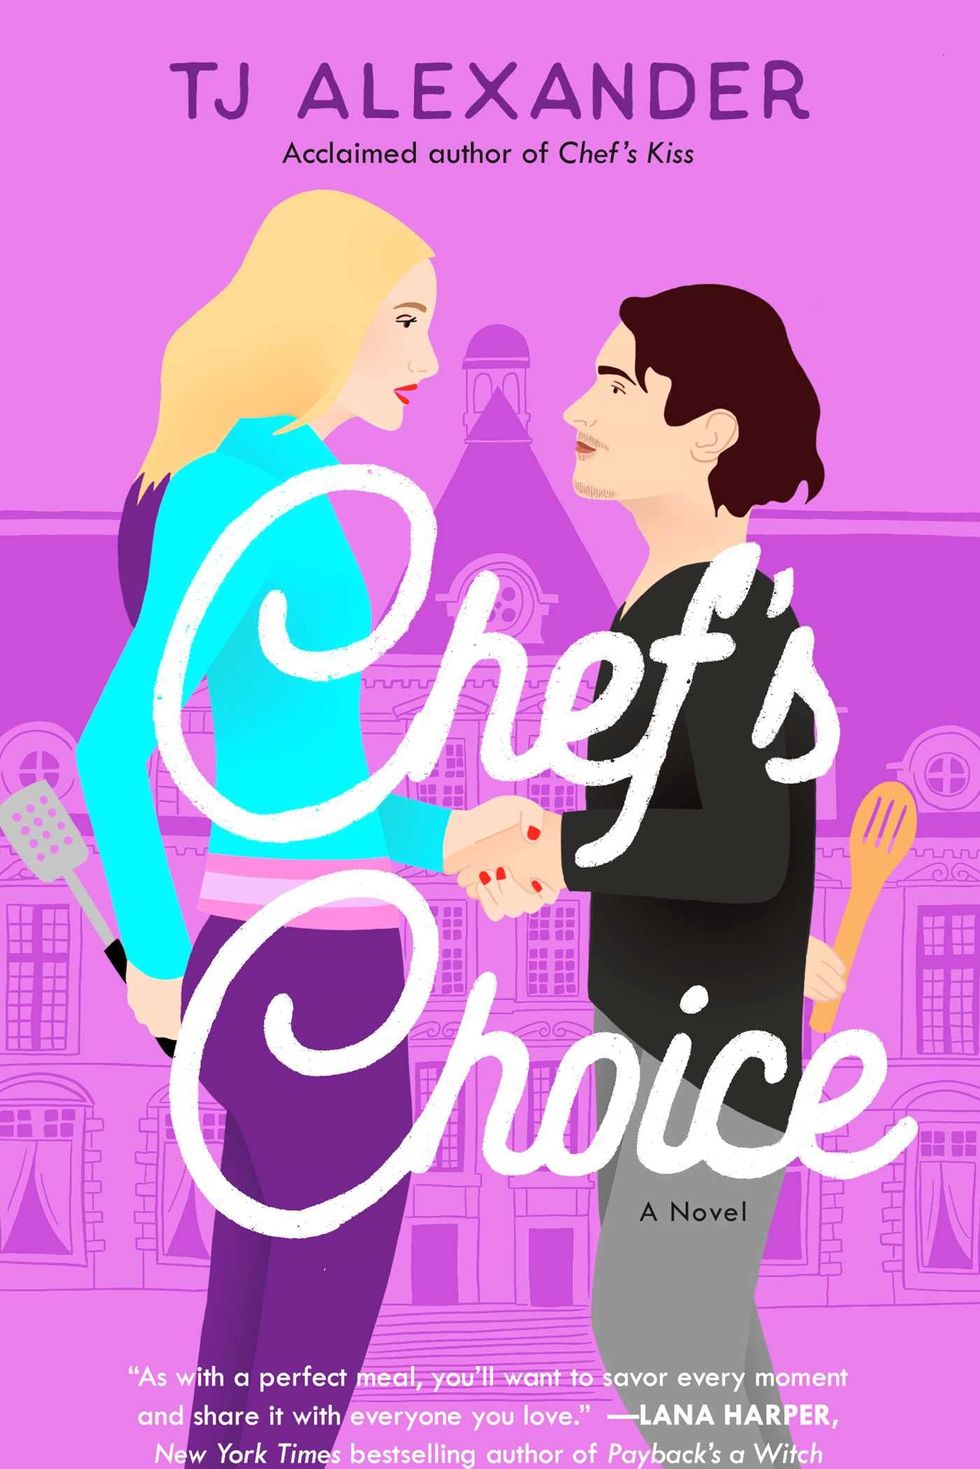 Chef's Choice by TJ Alexander